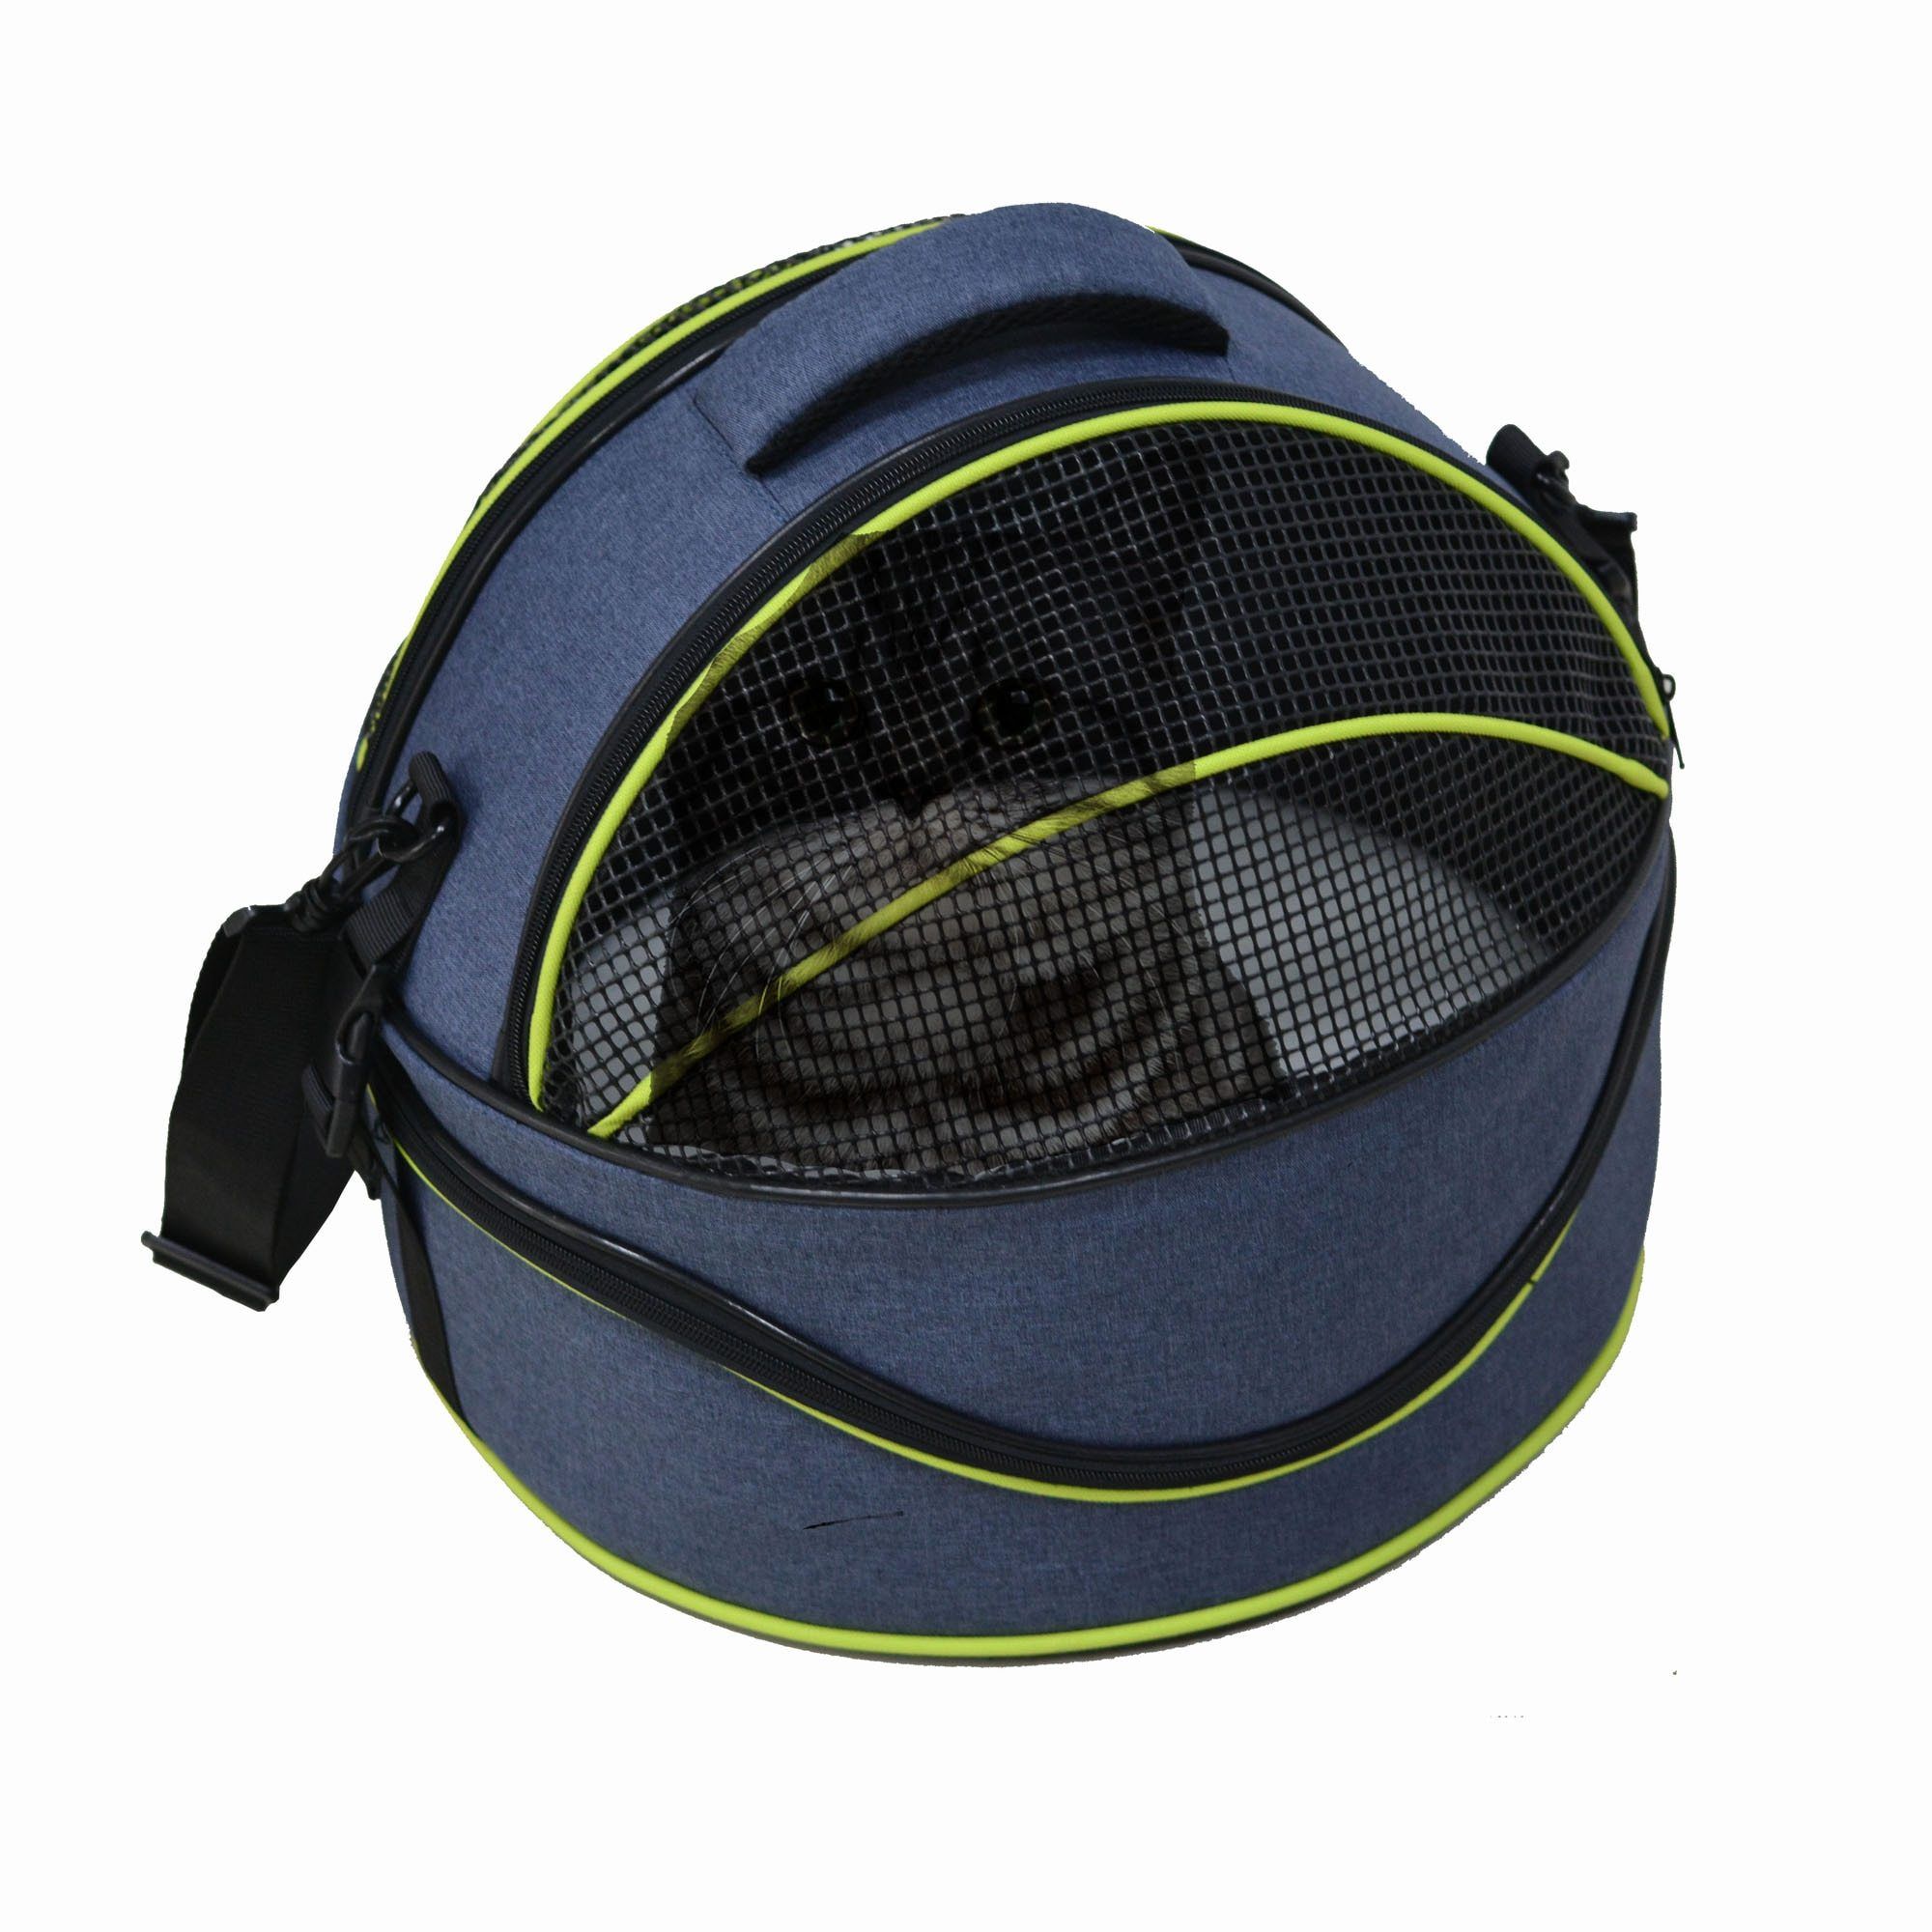 Multi-functional Pet Shoulder Bag